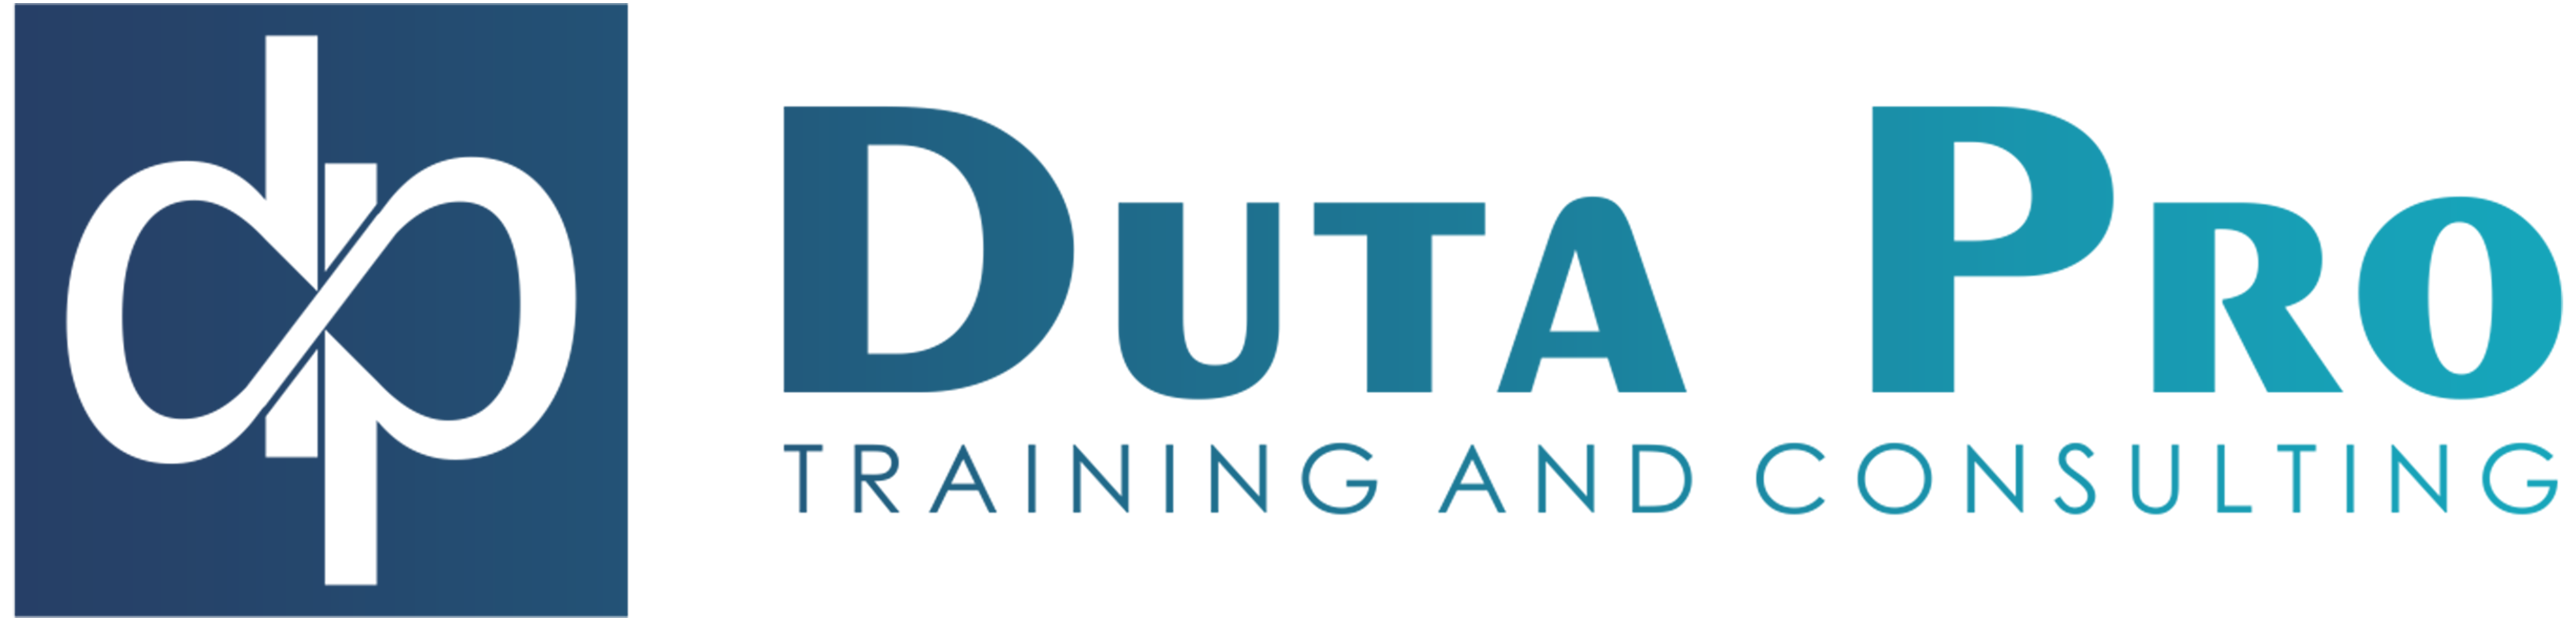 Duta Pro Training Consulting Logo - Tentang Kami